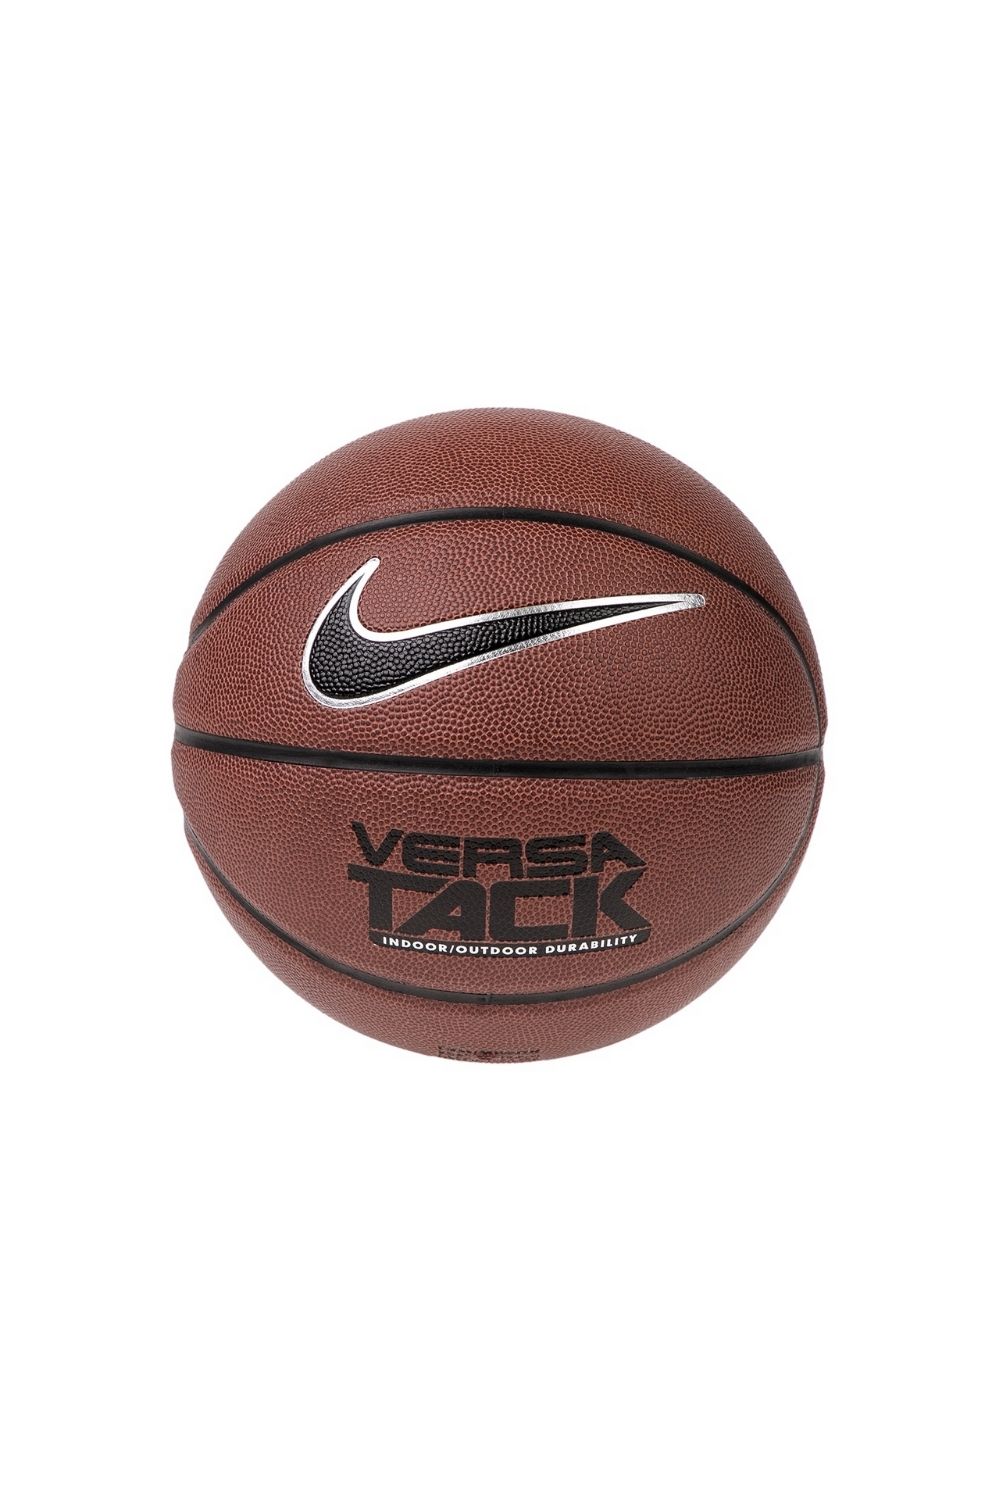 NIKE – Μπαλα basketball NIKE VERSA TACK 8P πορτοκαλι